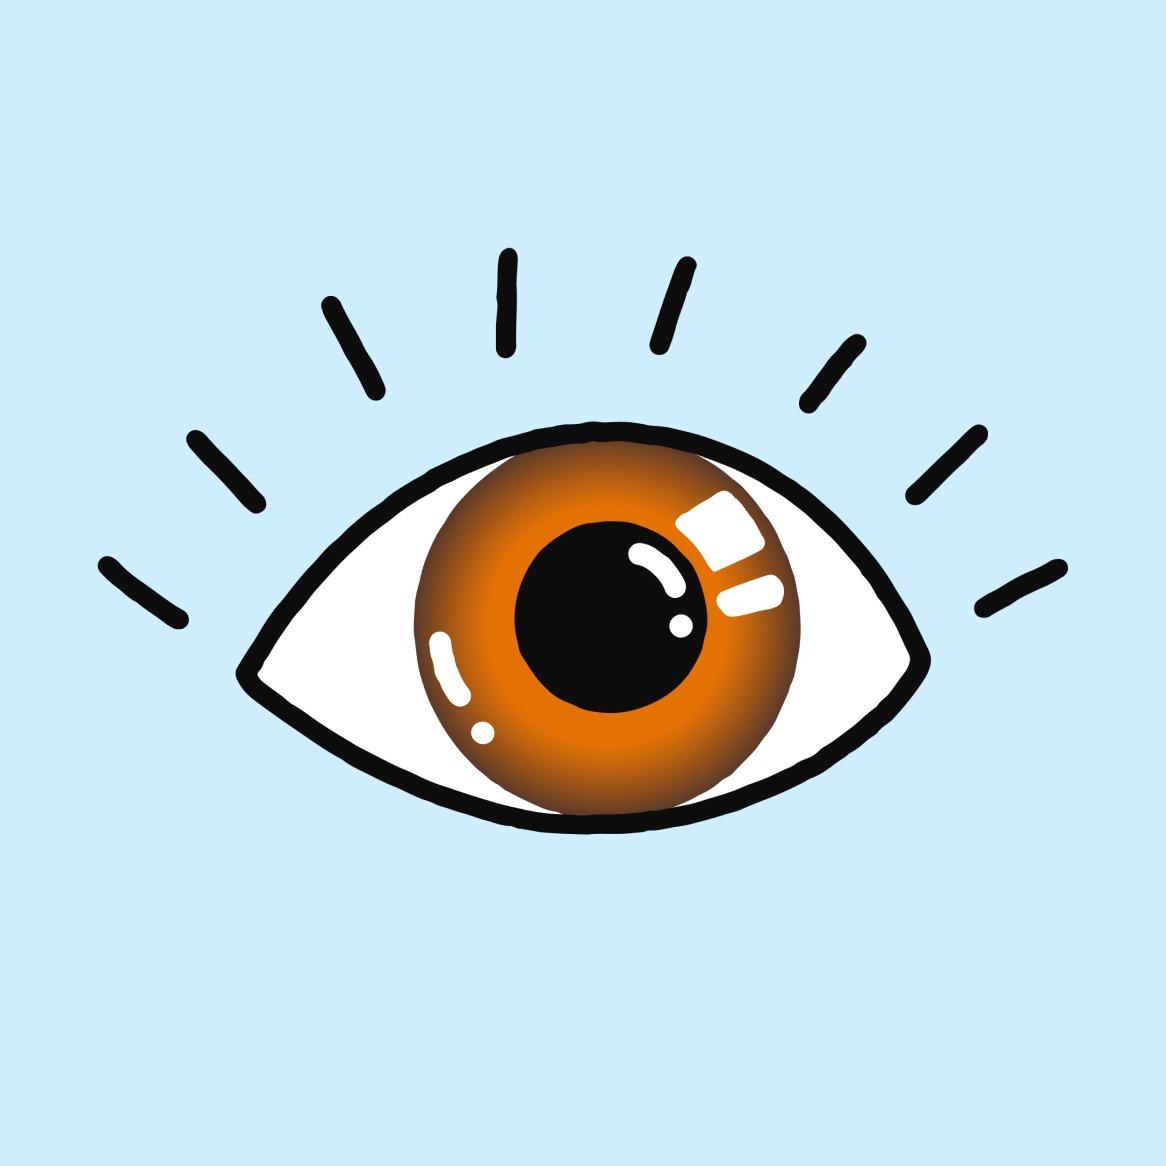 https://www.warbyparker.com/learn/wp-content/uploads/2022/10/amber-eyes-hero.jpg